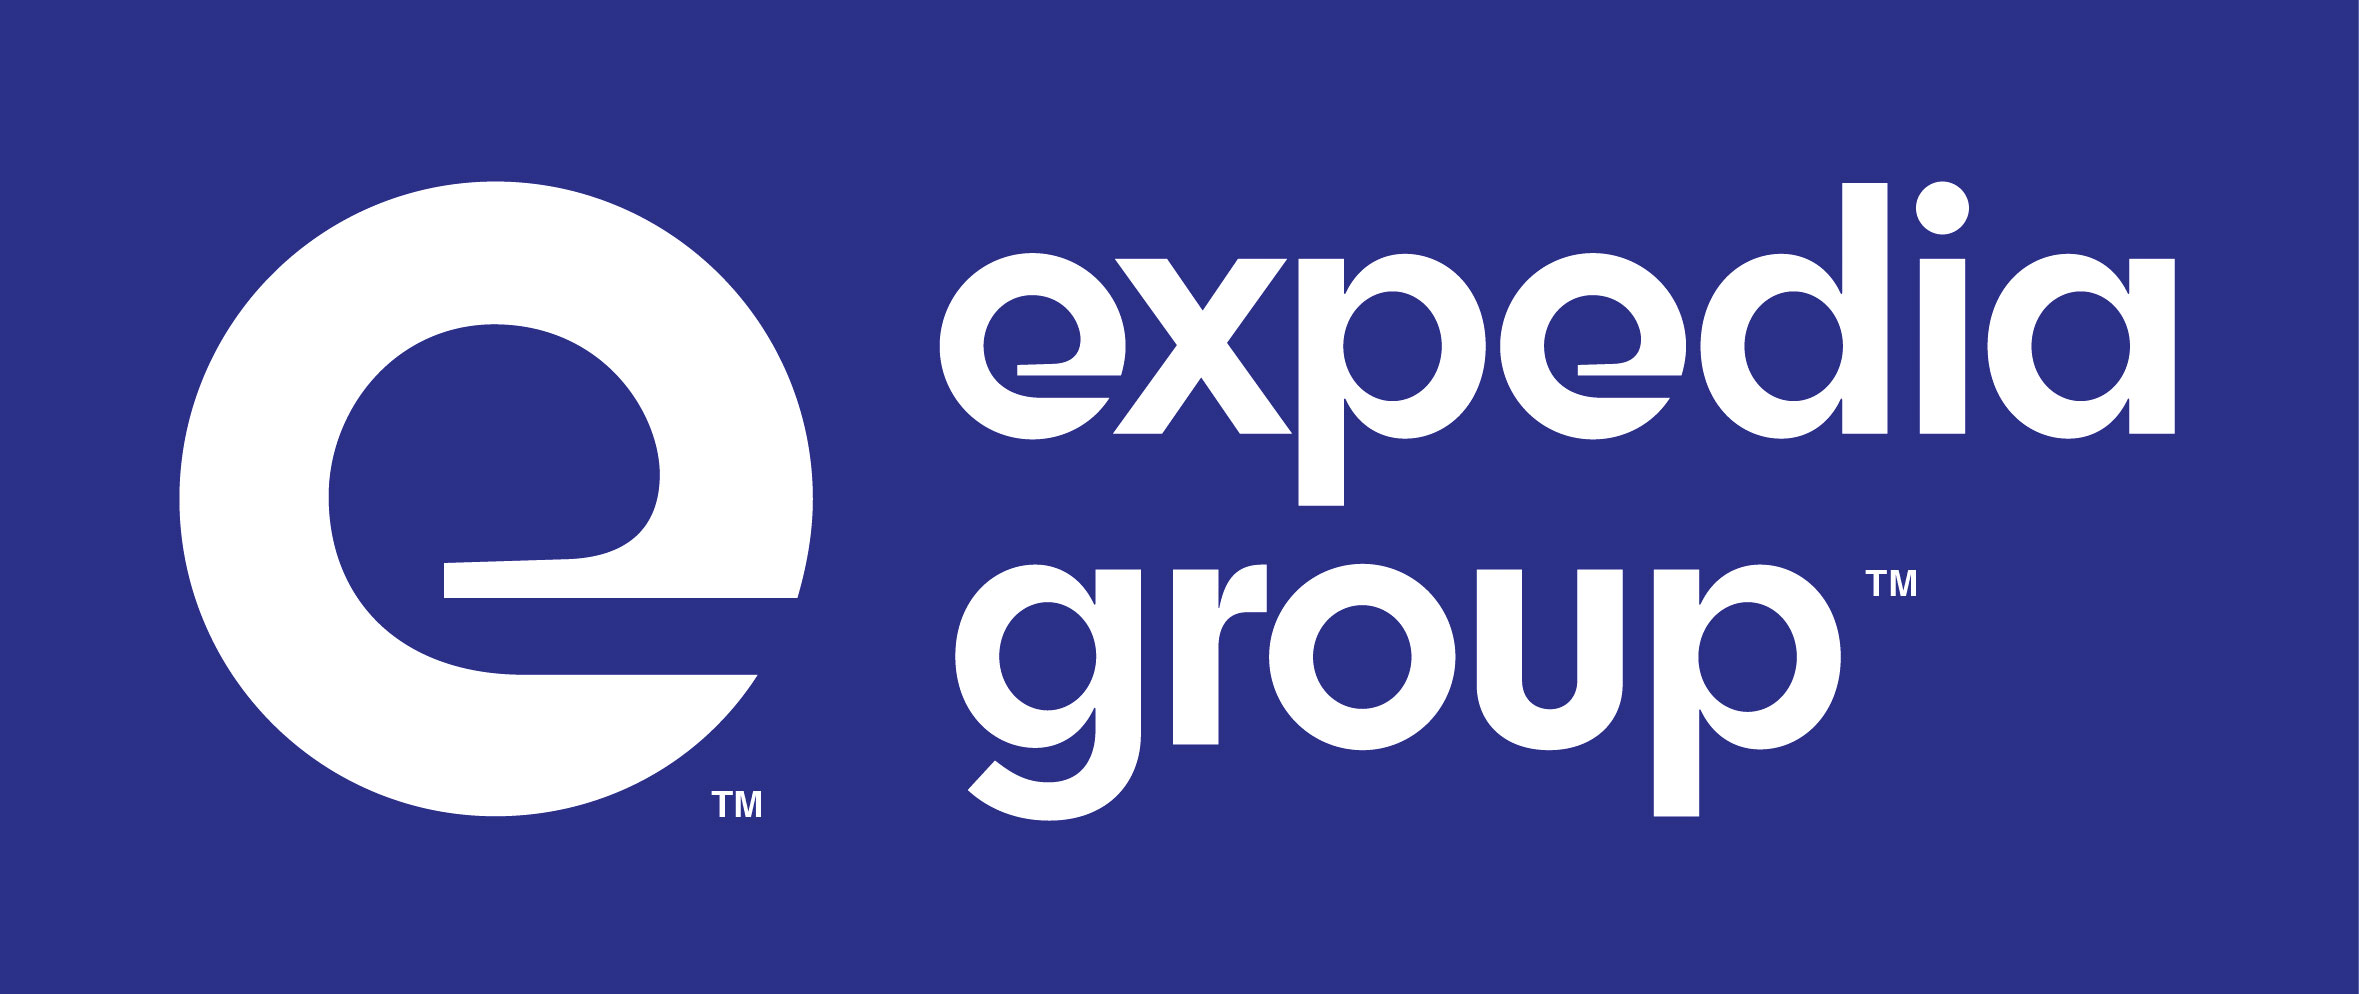 Expedia-Group-2018_Horizontal_White_on_Blue.jpg